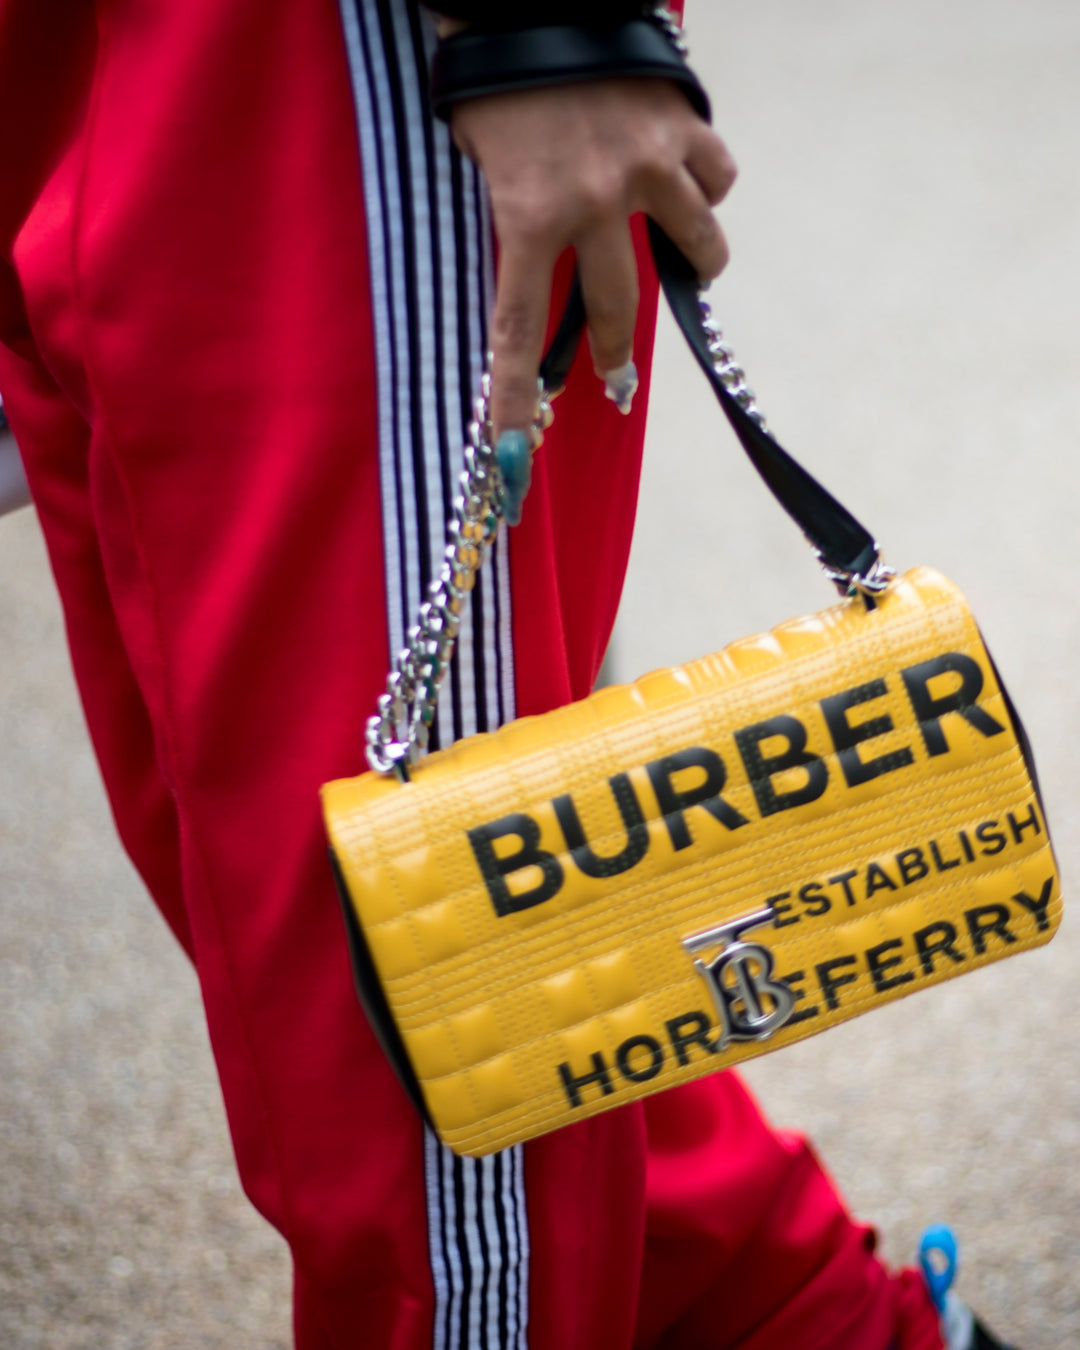 Is Burberry a good bag brand?